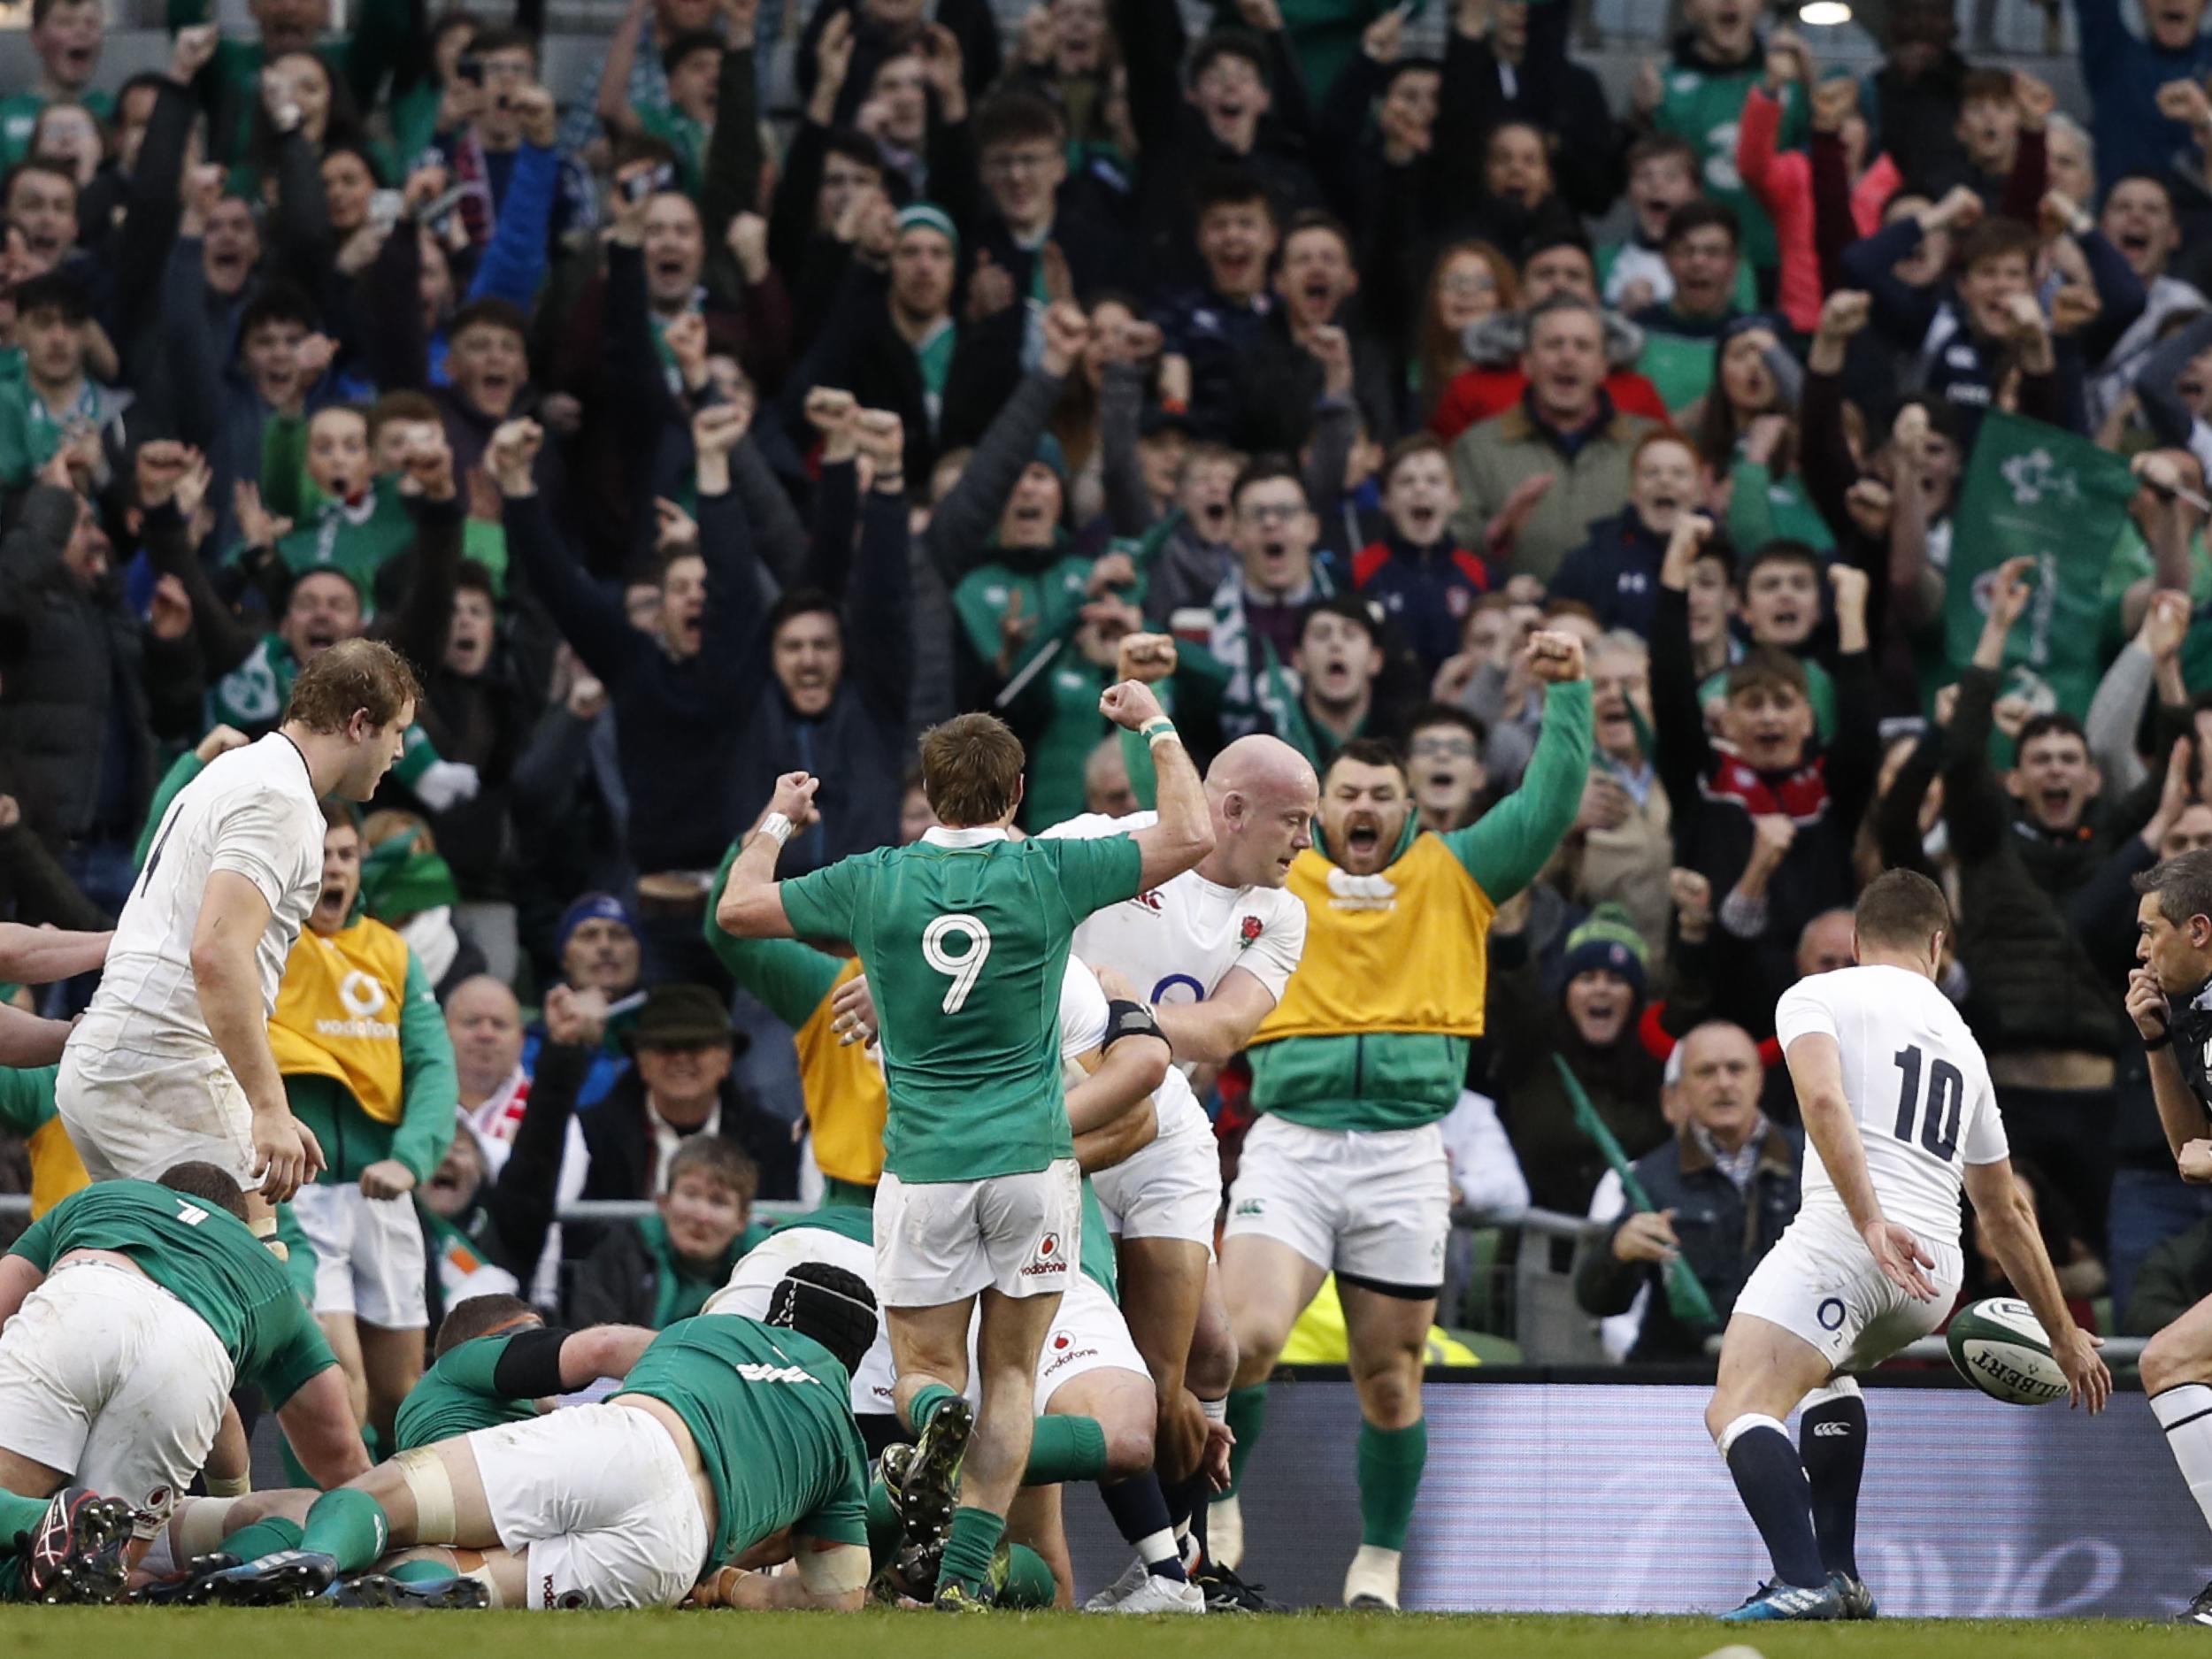 Iain Henderson scored the try for Ireland